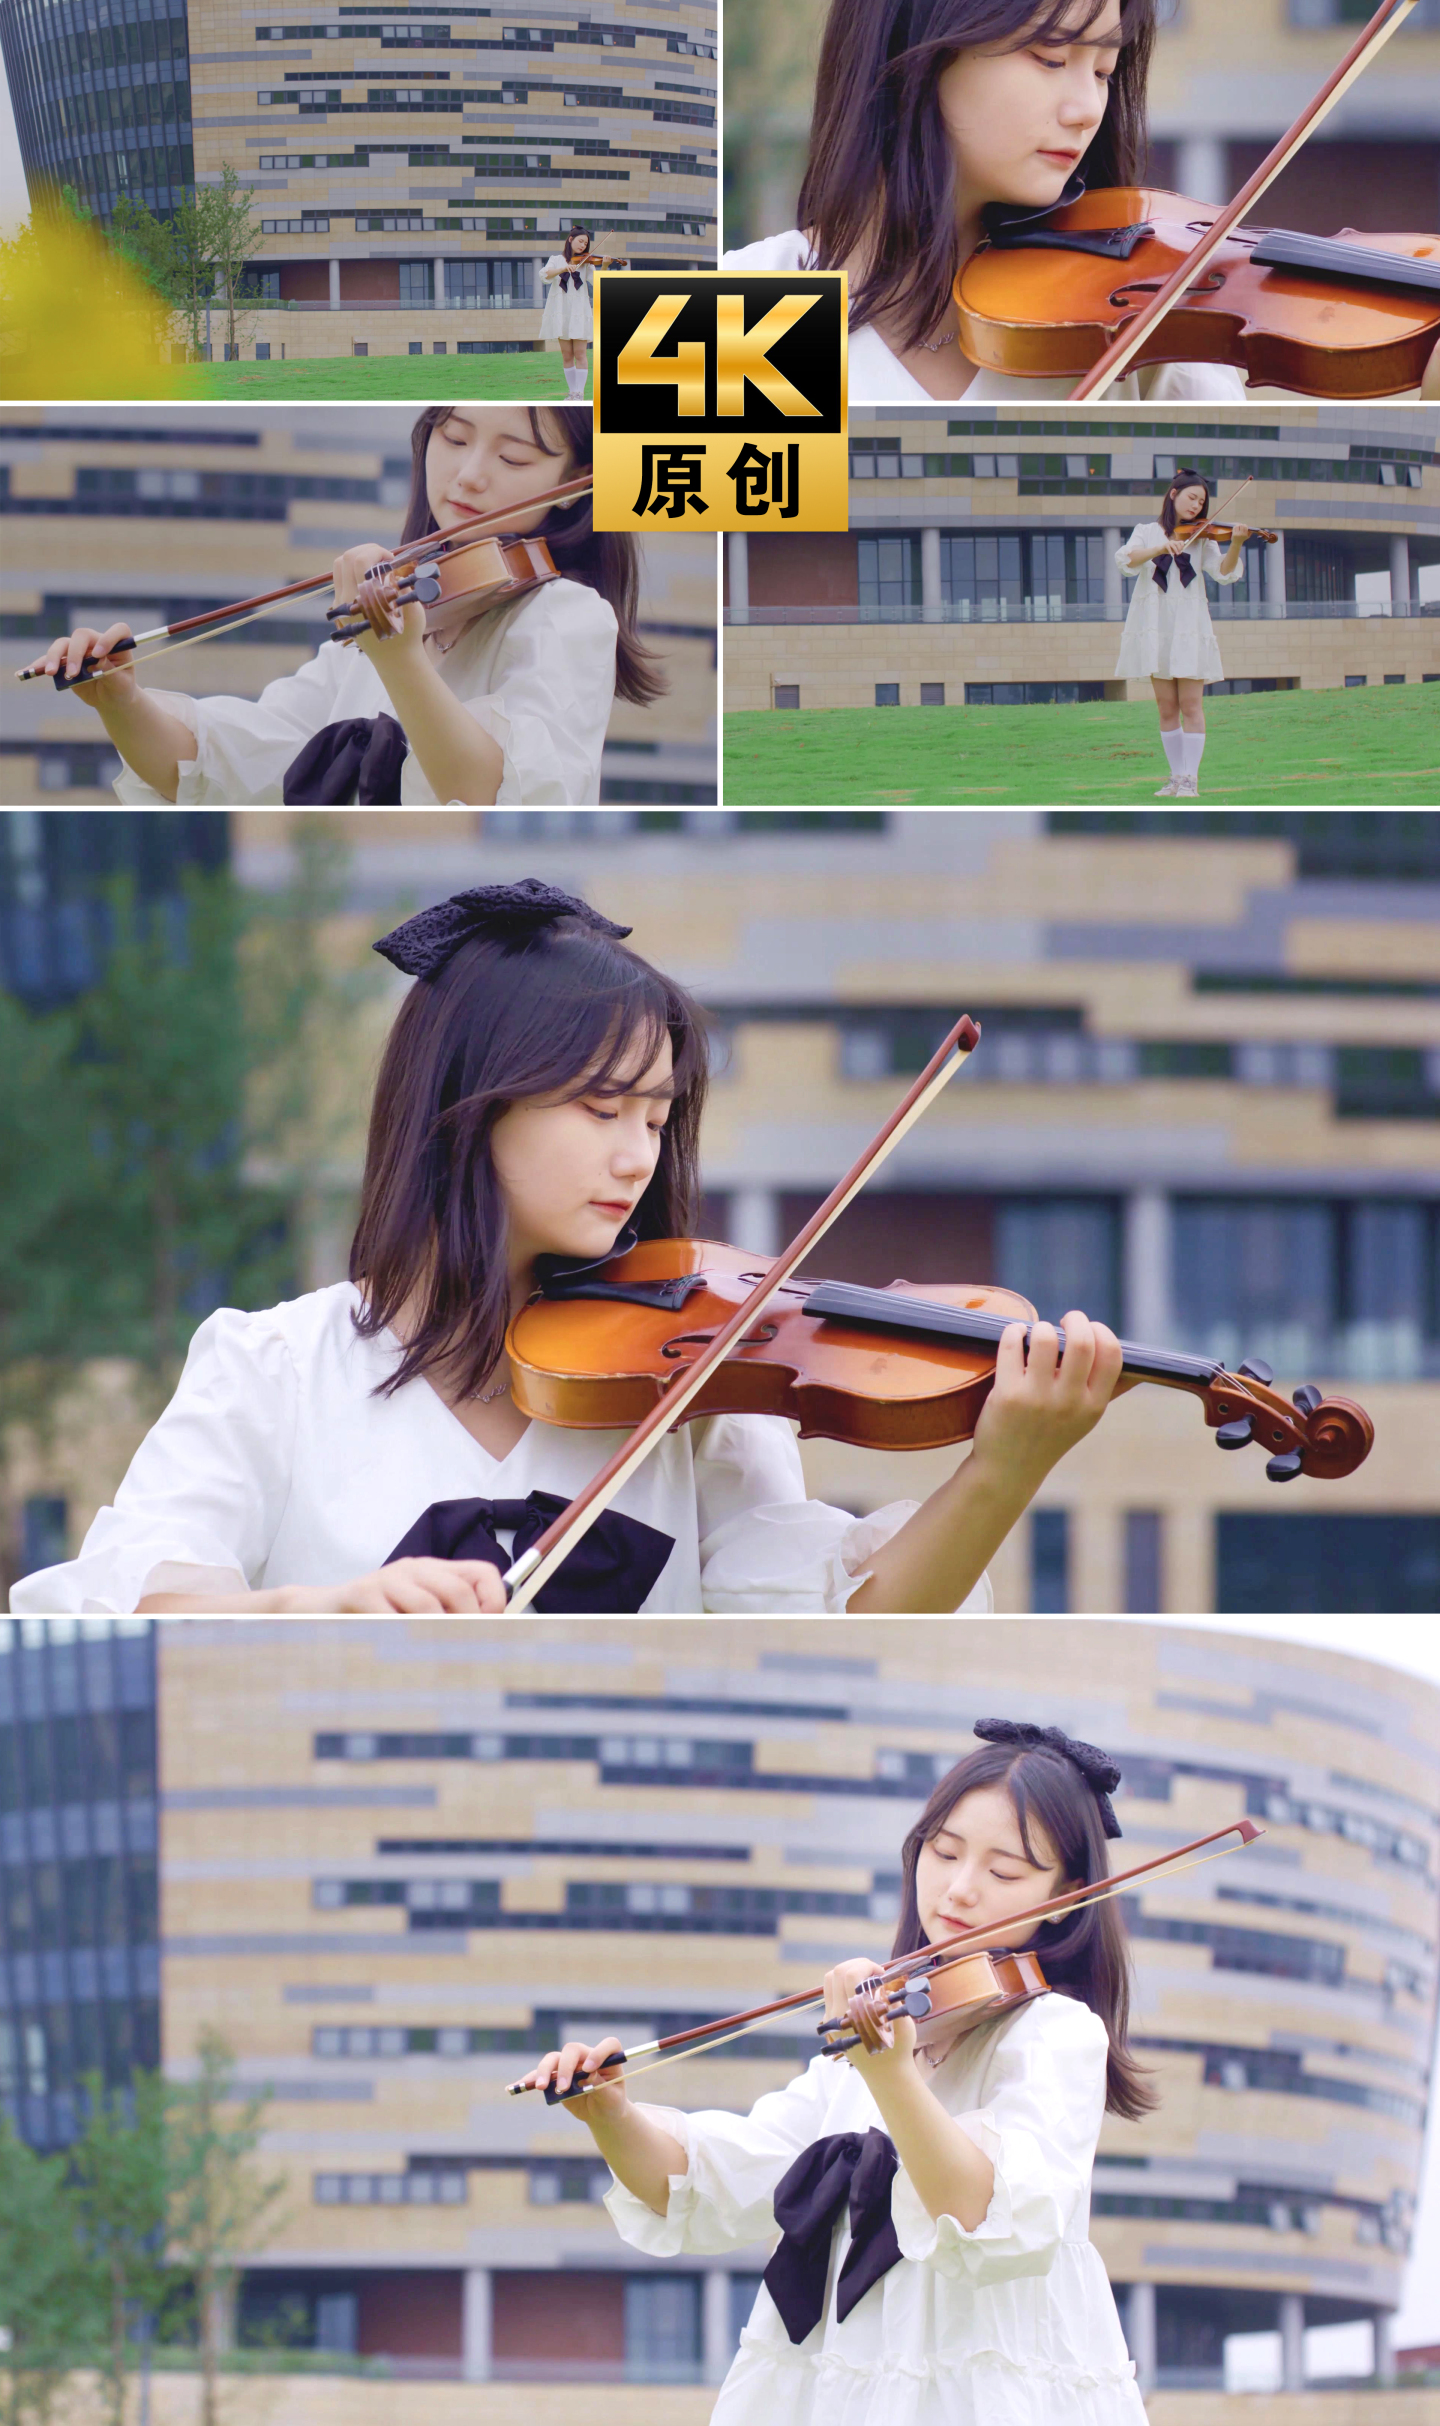 【4K】草坪美女拉小提琴